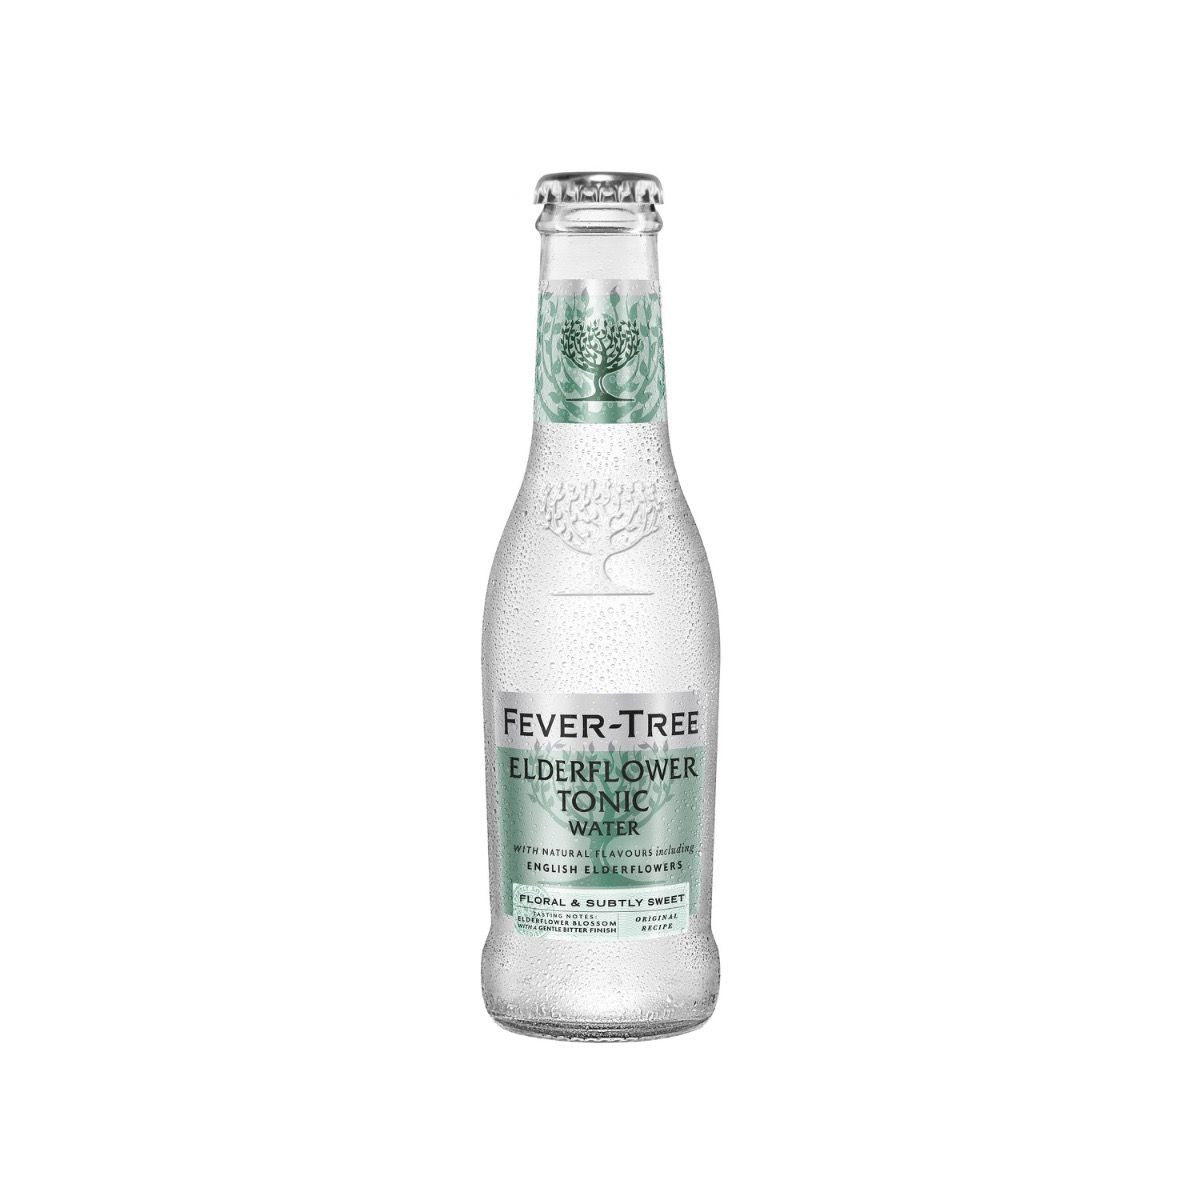 Brug Fever-Tree Elderflower Tonic Water 200 ml til en forbedret oplevelse